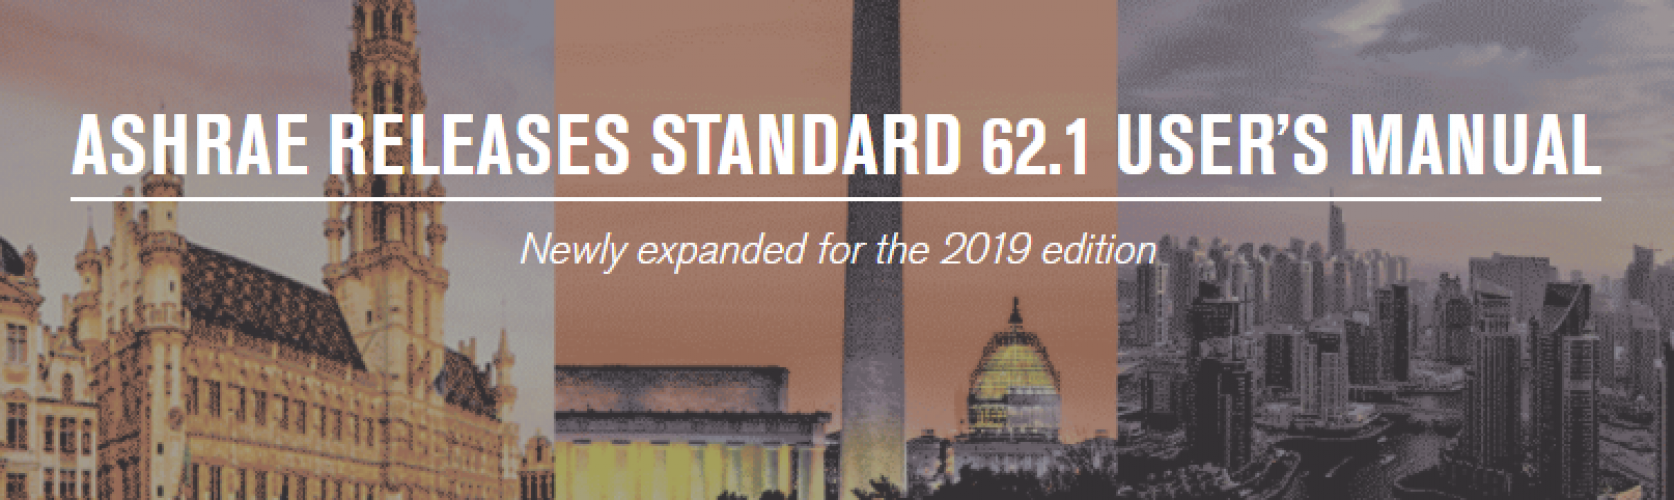 ASHRAE Releases Standard 62.1 User’s Manual